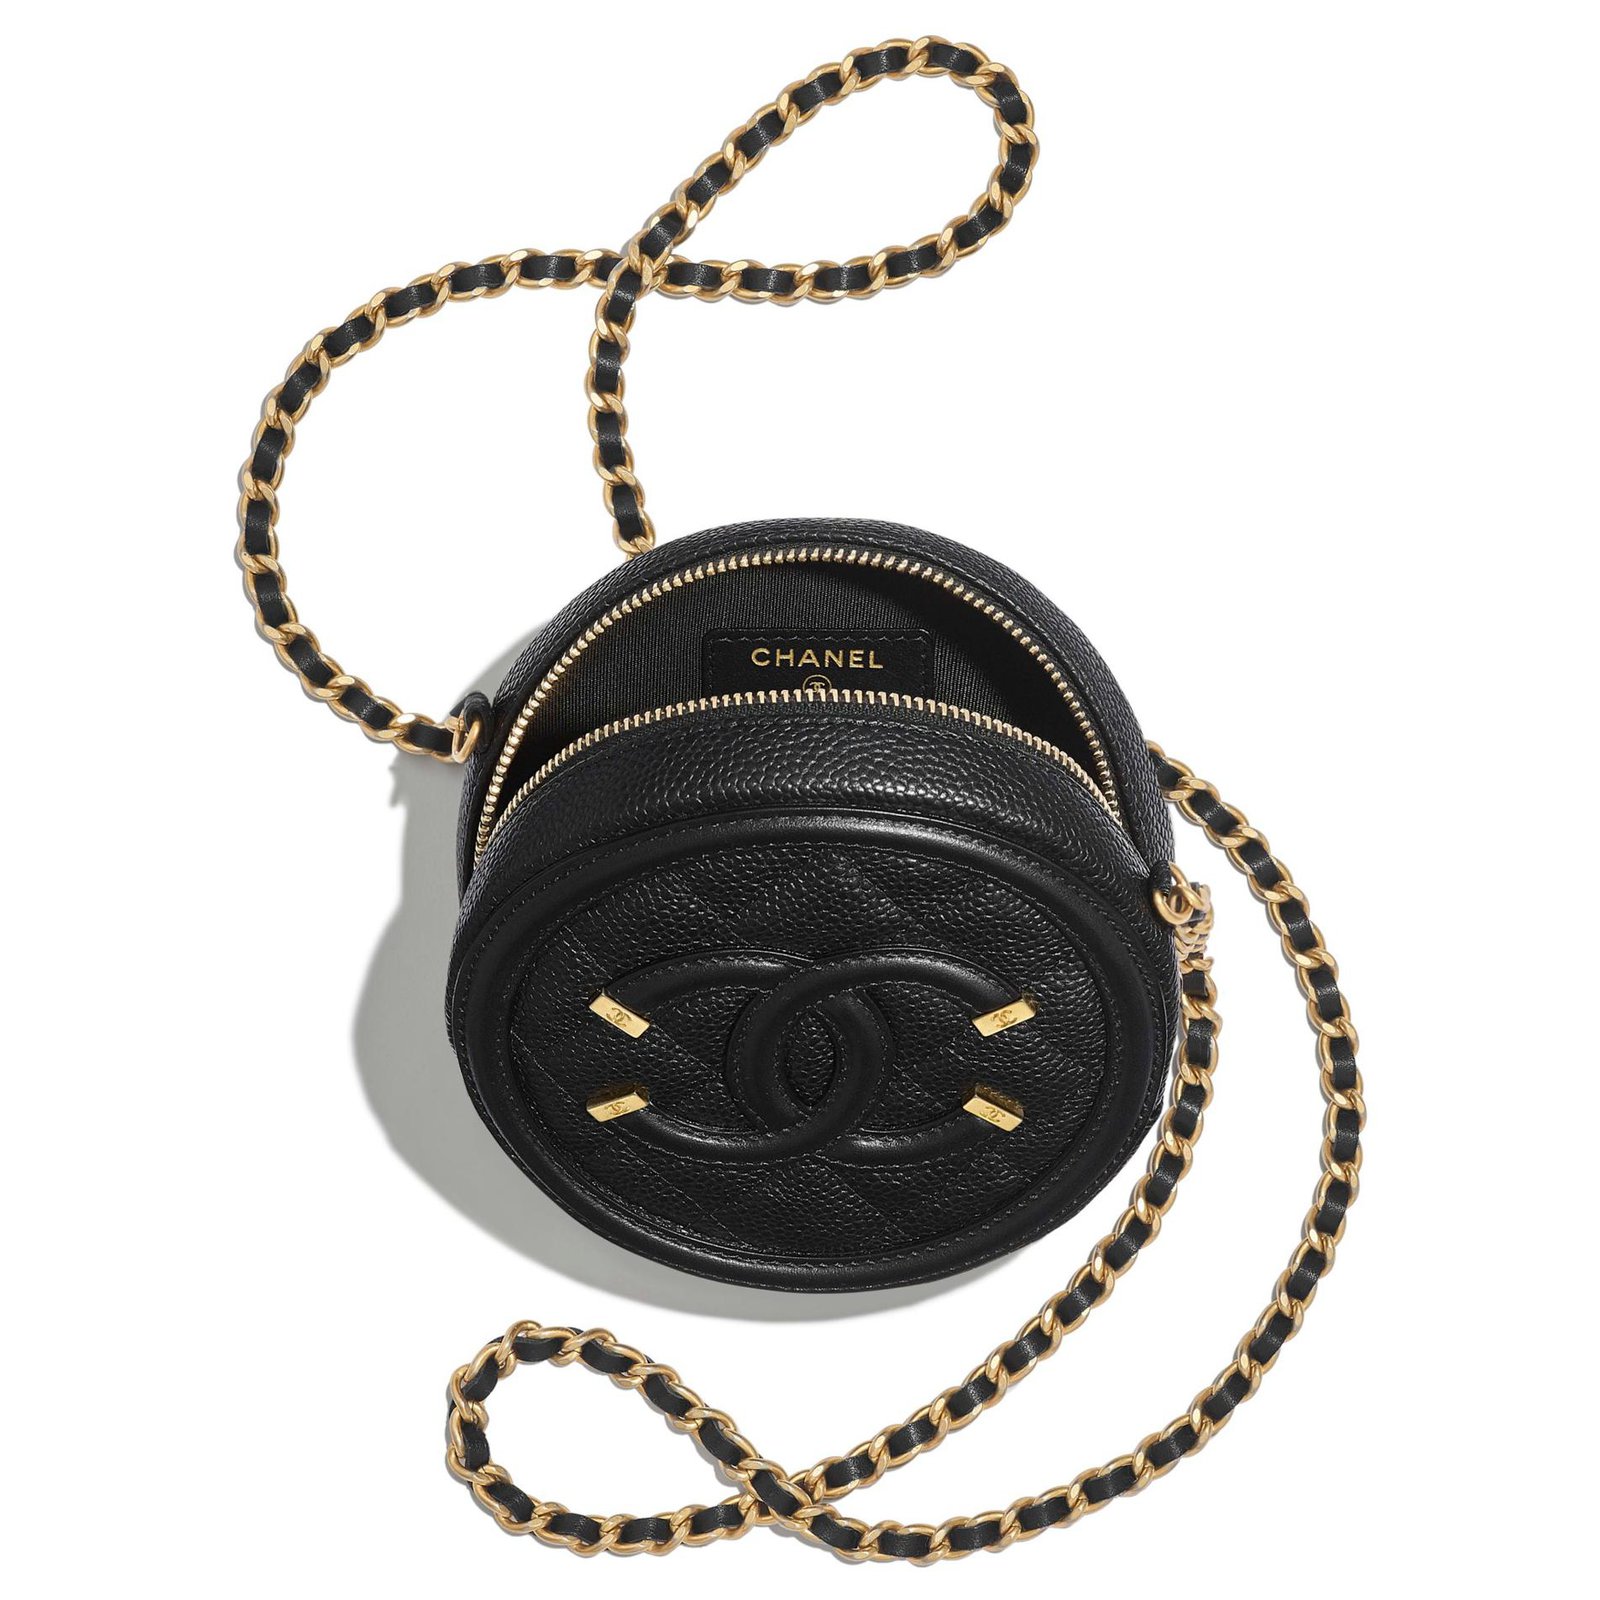 Chanel - Gold Filigree 'CC' Round Necklace